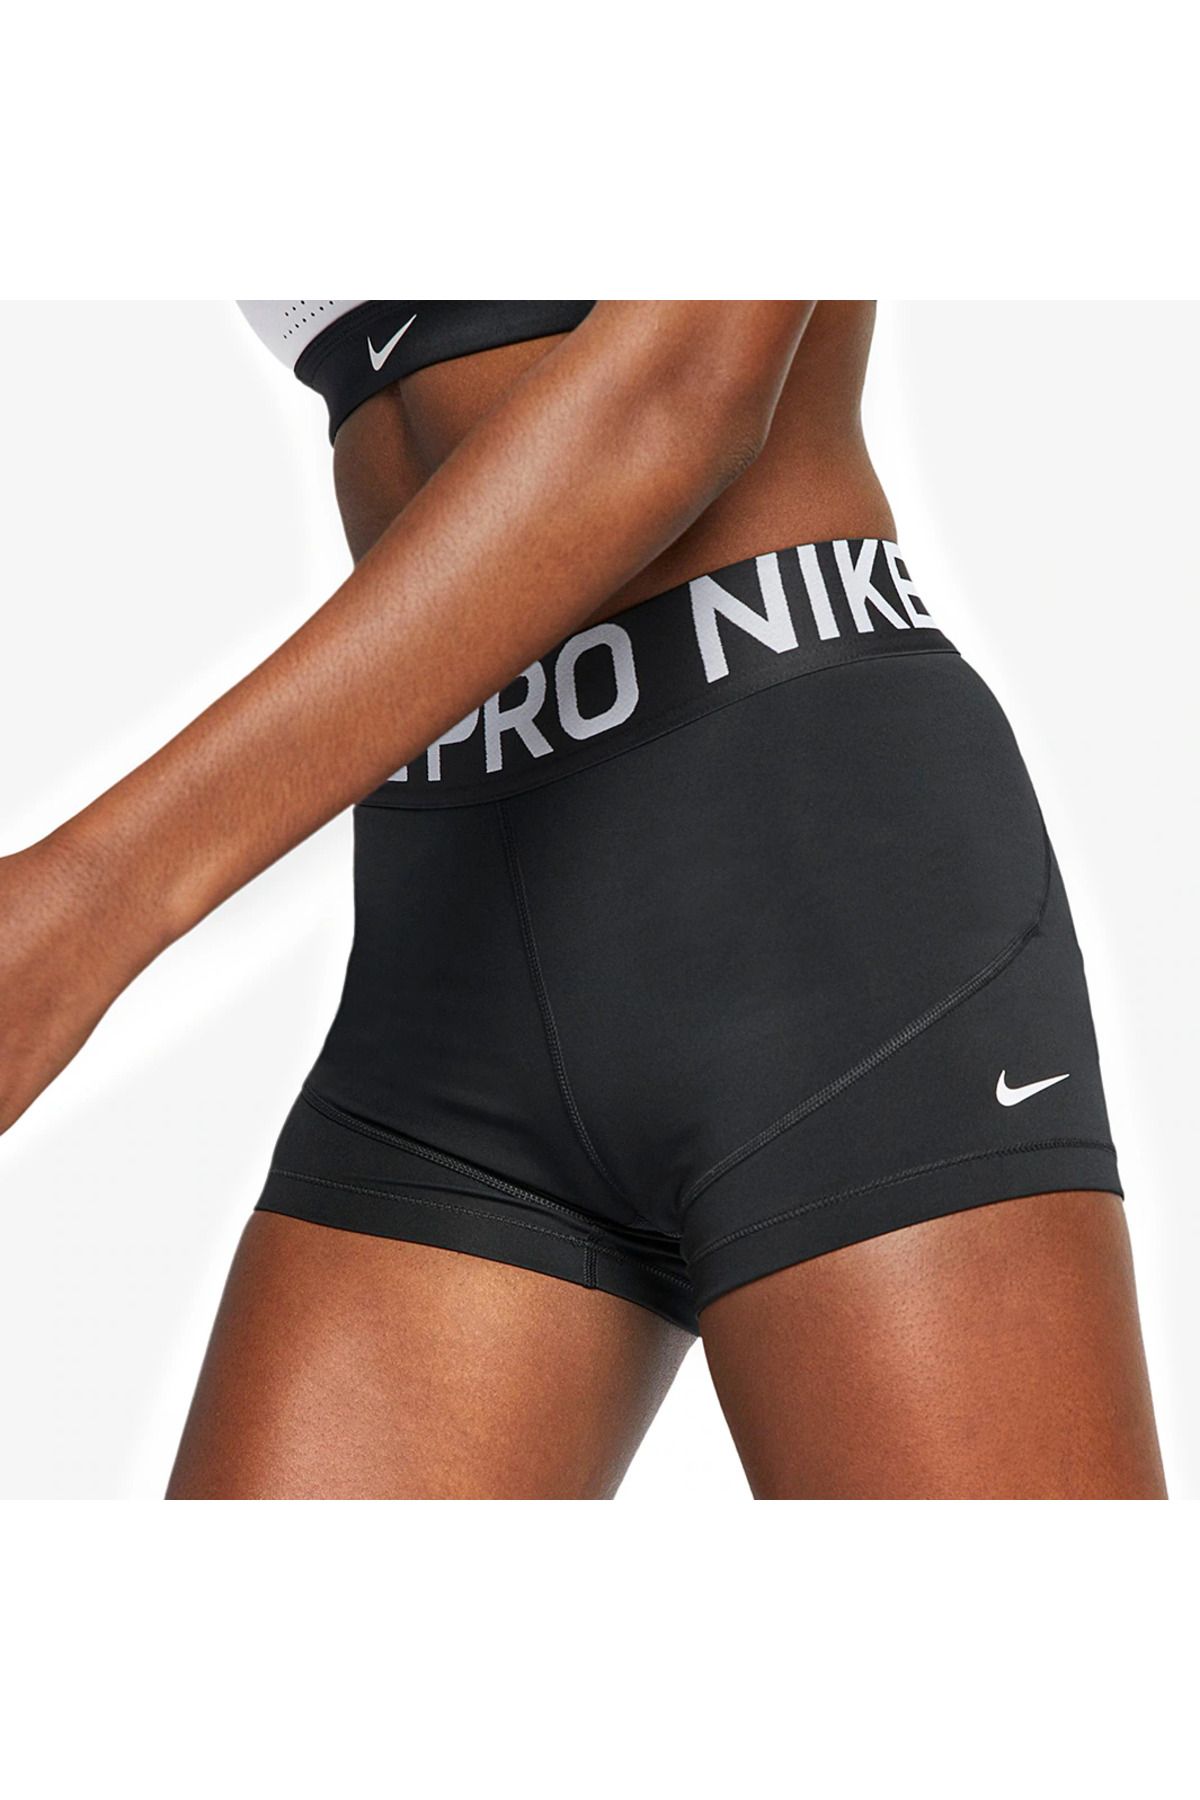 Nike Pro 3" (7.5cm approx.) Training Kadın Şort